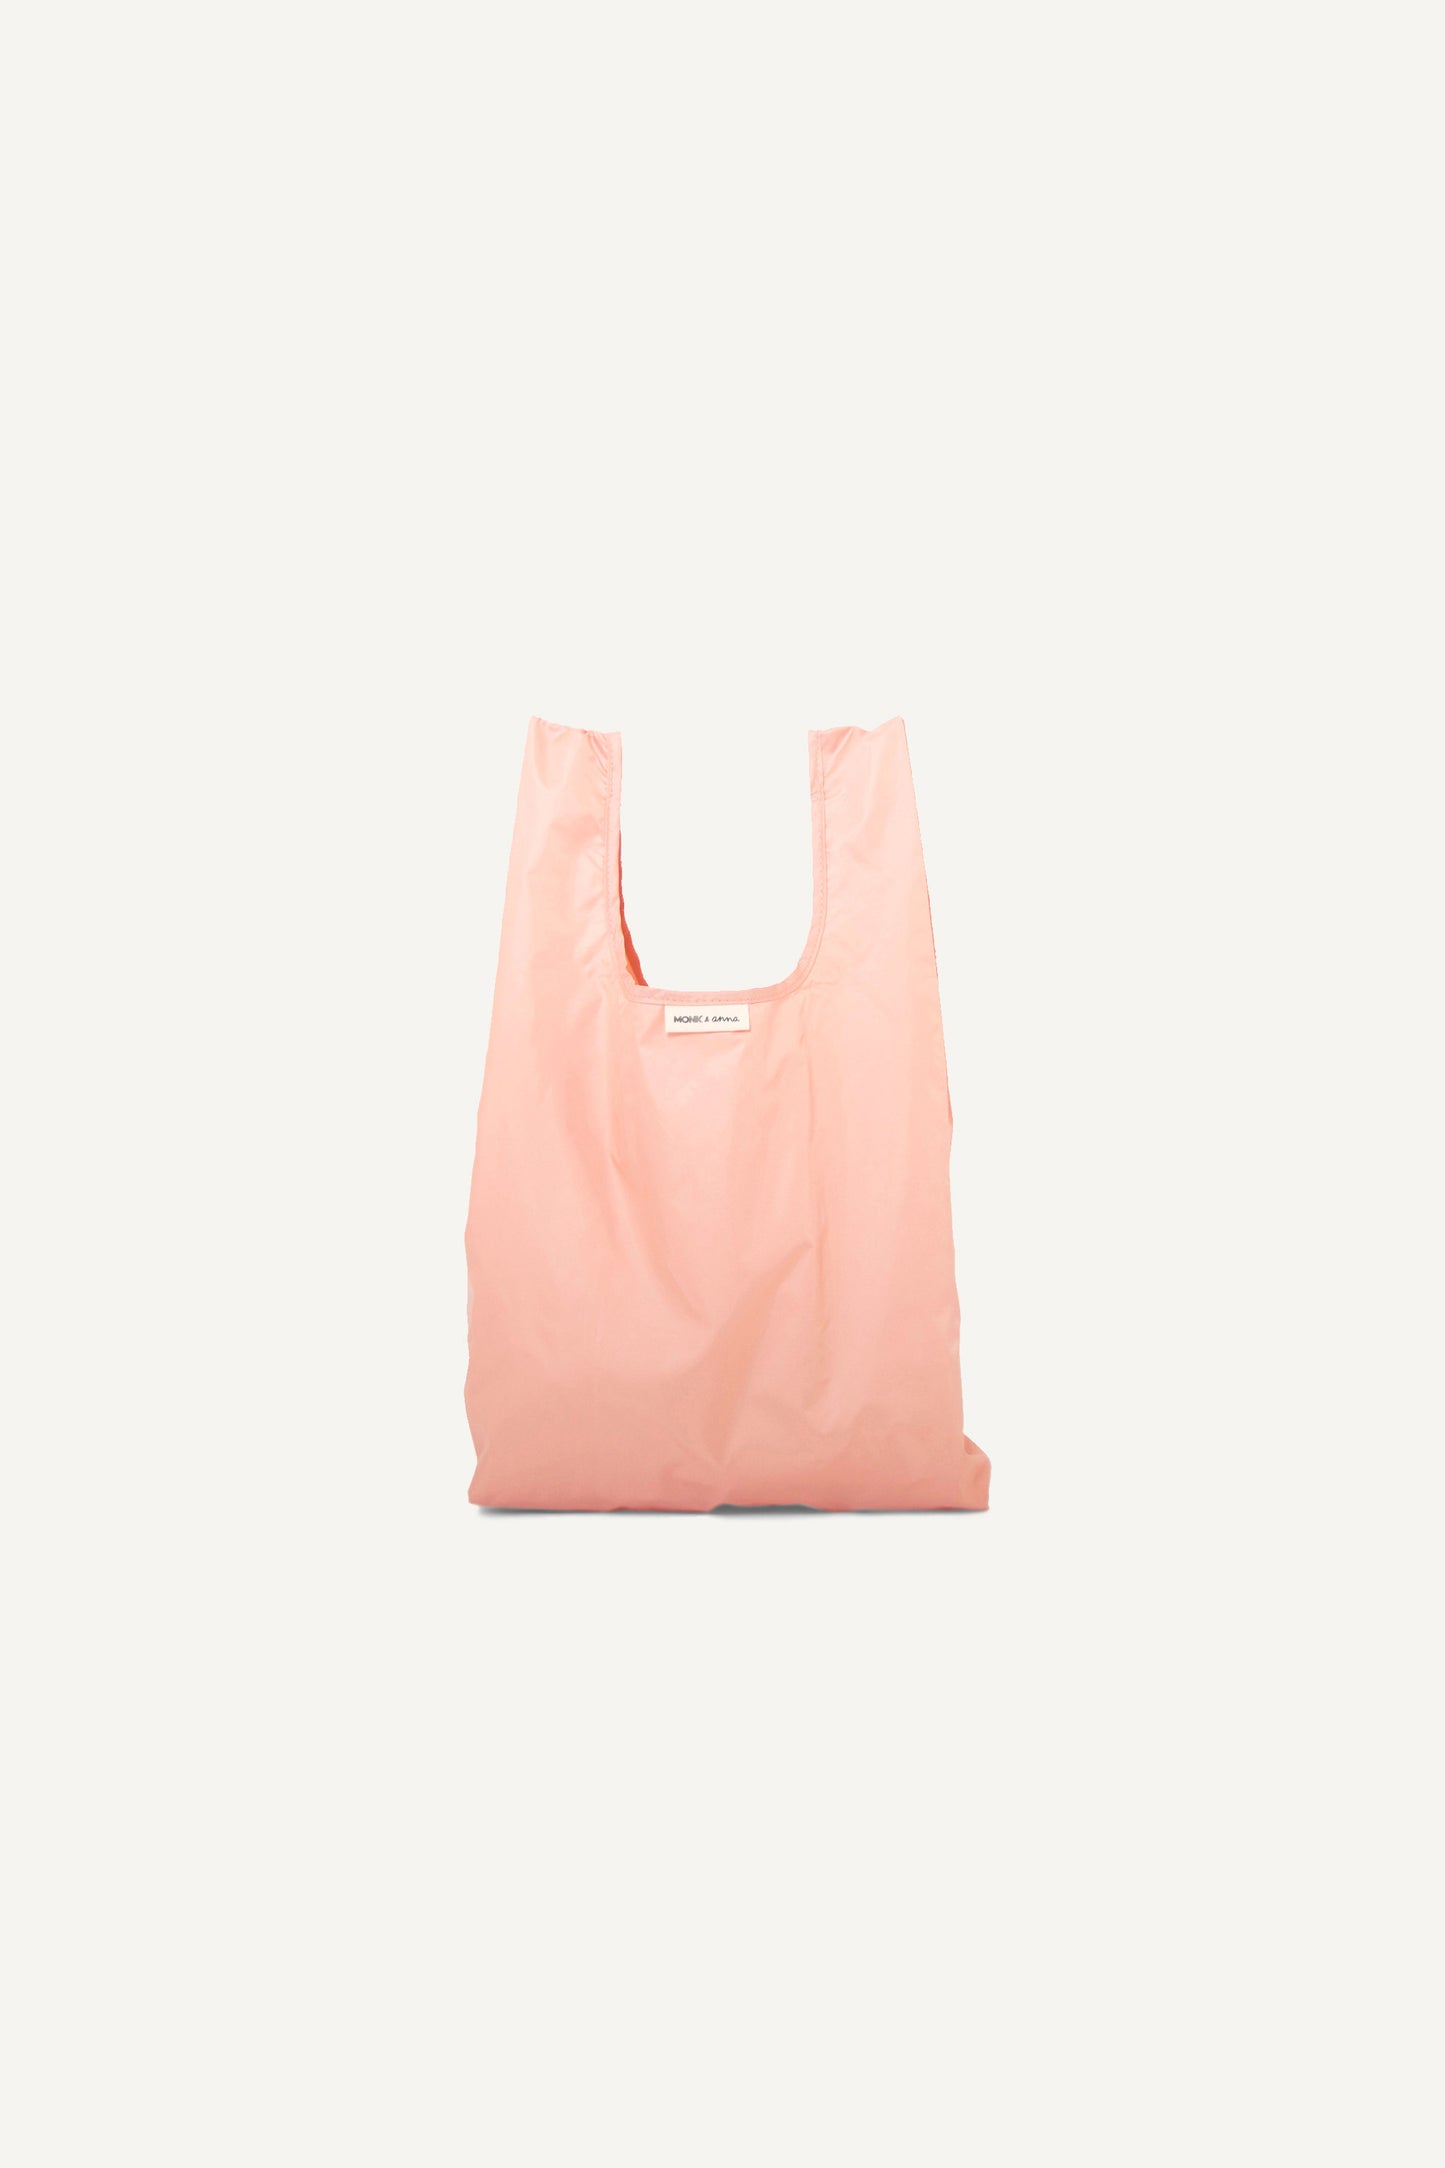 Monk & Anna - Monk Bag - Soft Pink